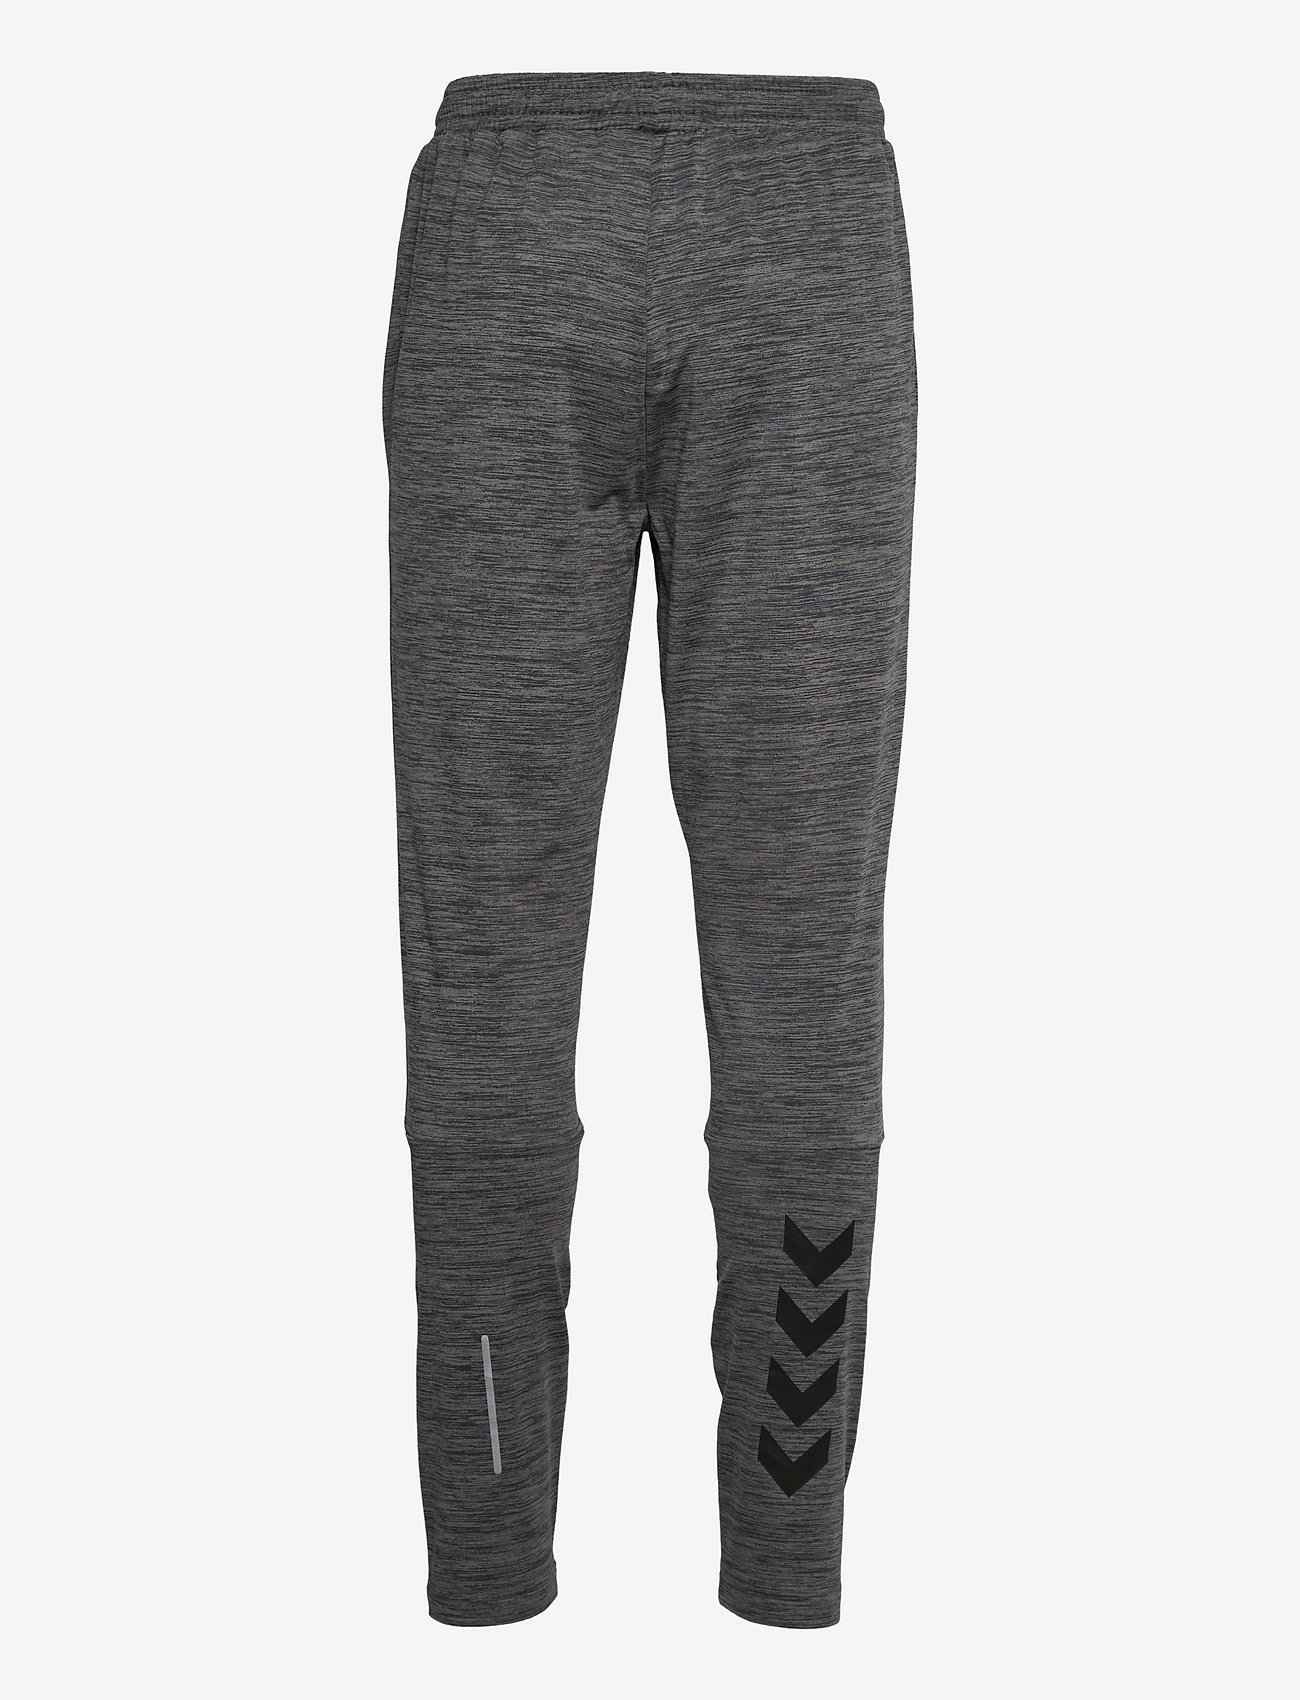 Hummel - hmlASTON TAPERED PANTS - sports pants - dark grey melange - 1